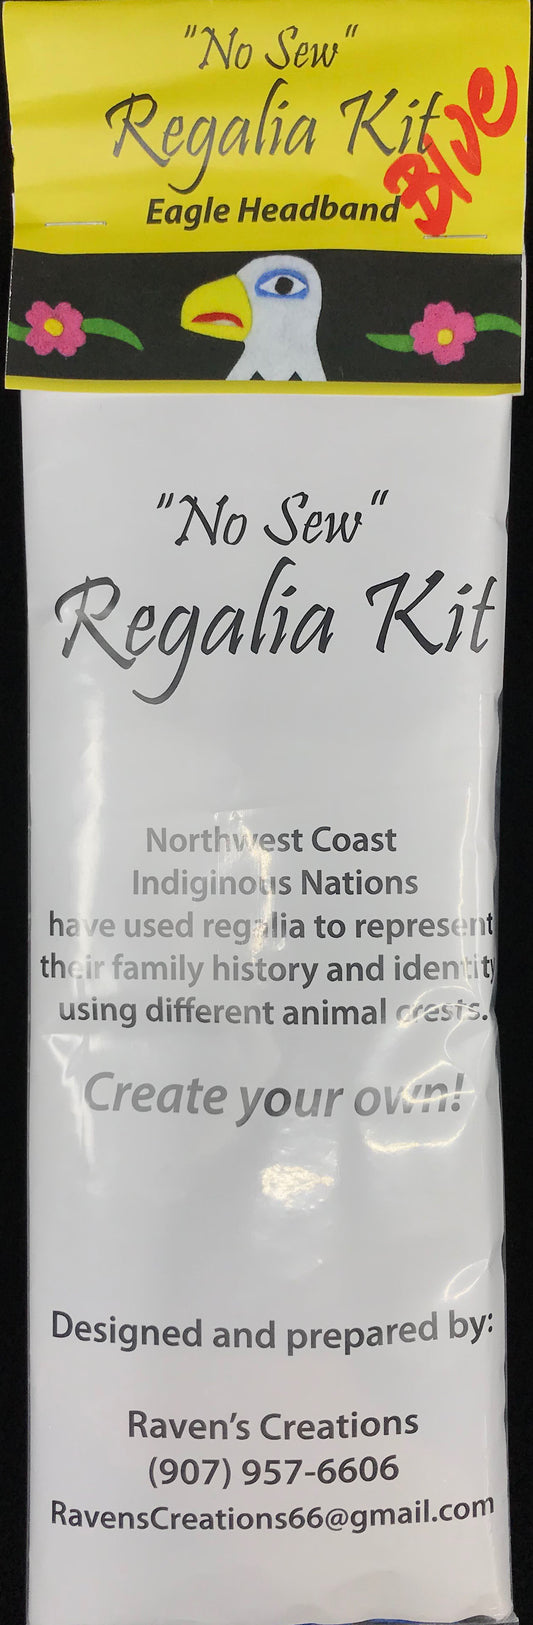 Regalia- V. Johnson, Felt, Children's Regalia Headband Kit, Eagle or Raven